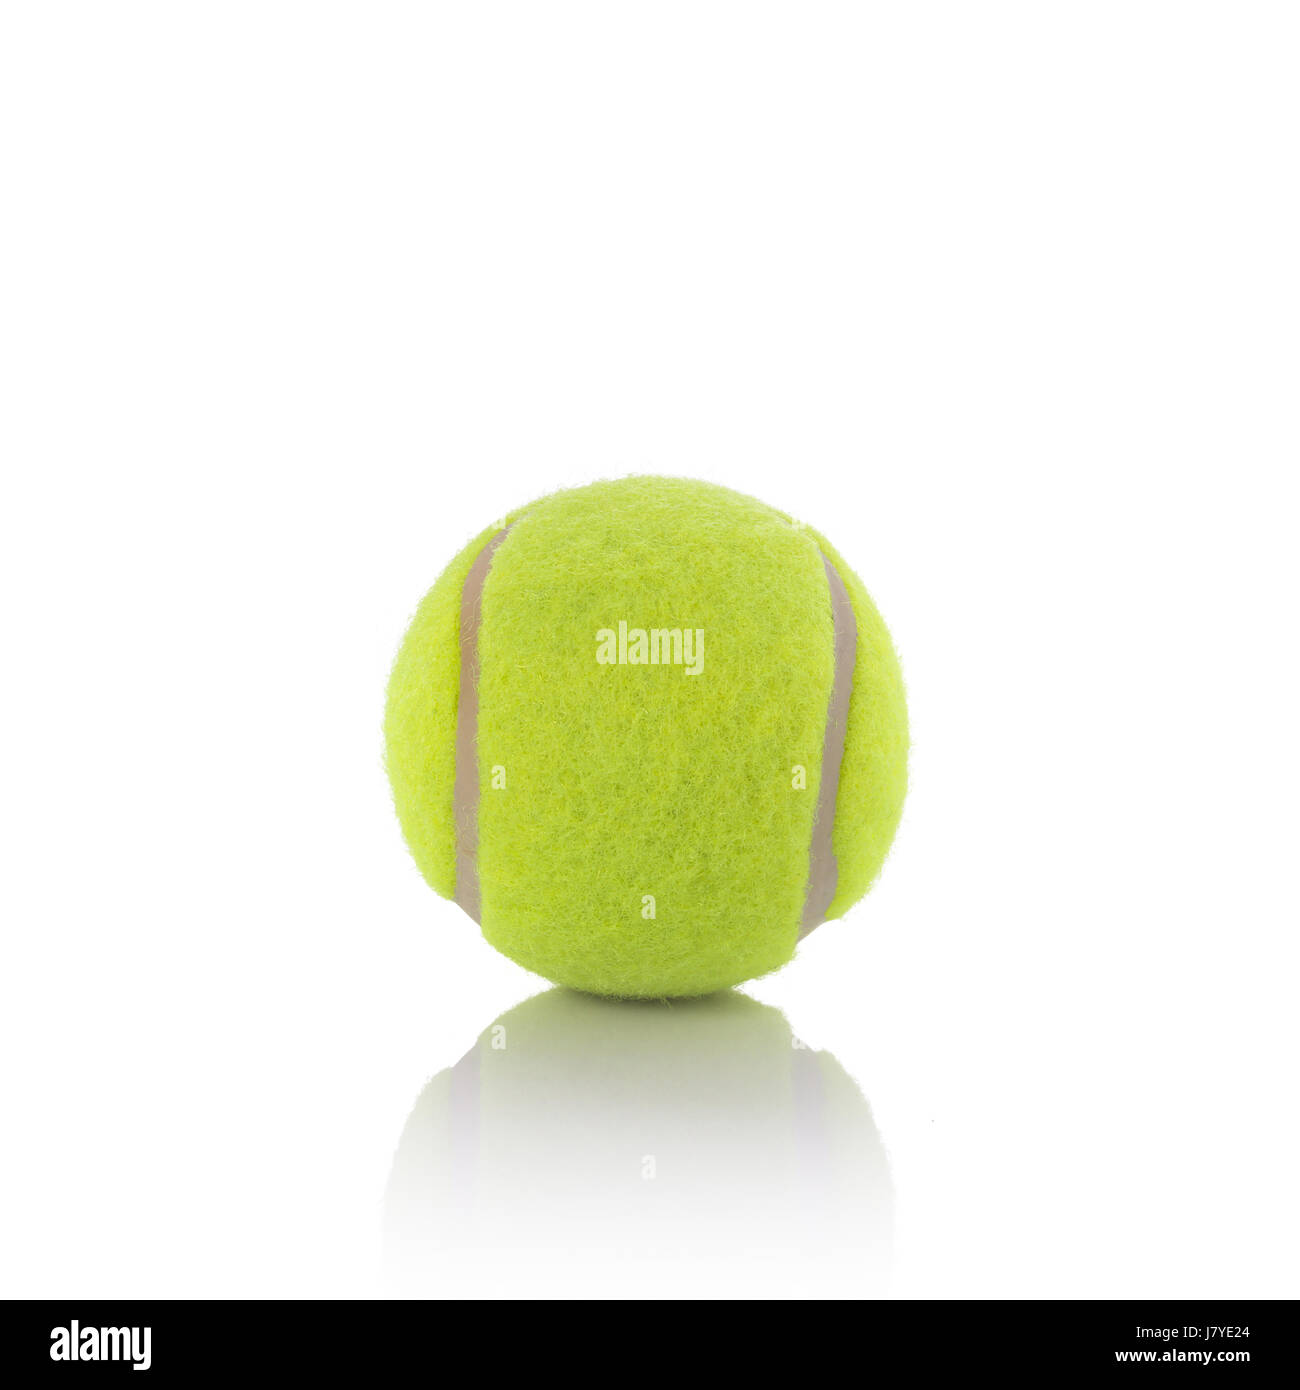 Close up new tennis ball. Studio shot isolated on white background Stock Photo